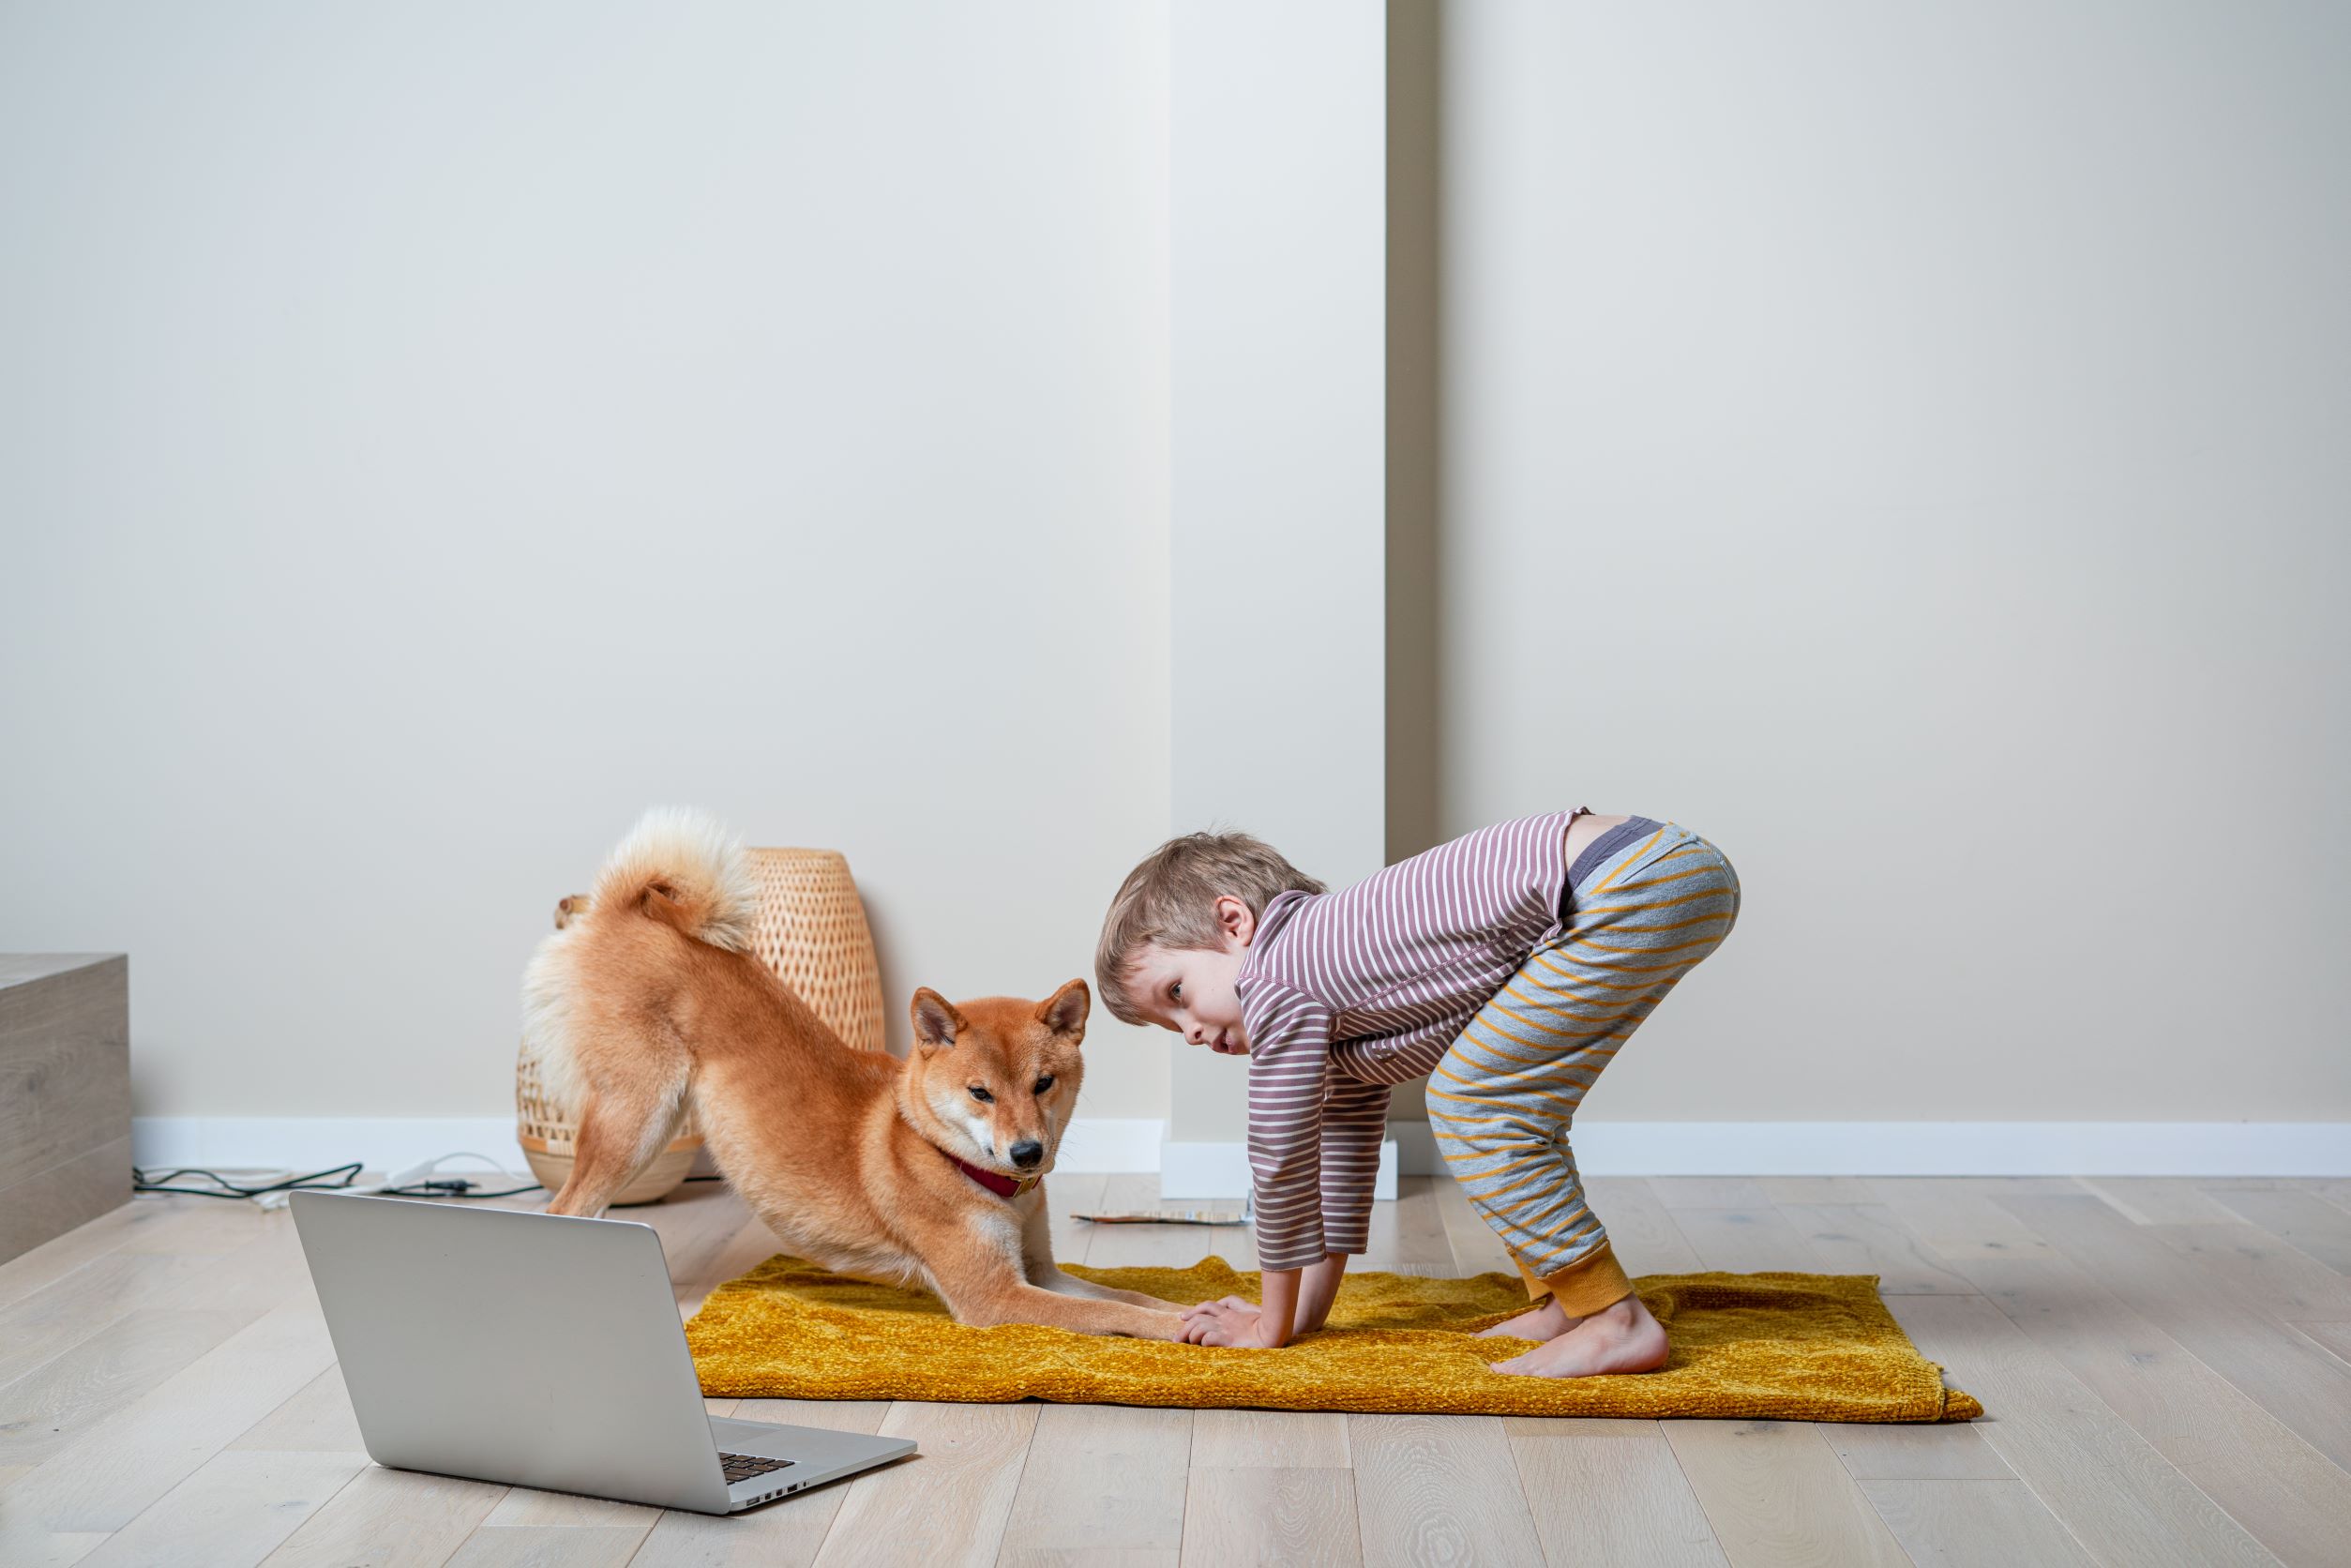 Dog and child doing yoga